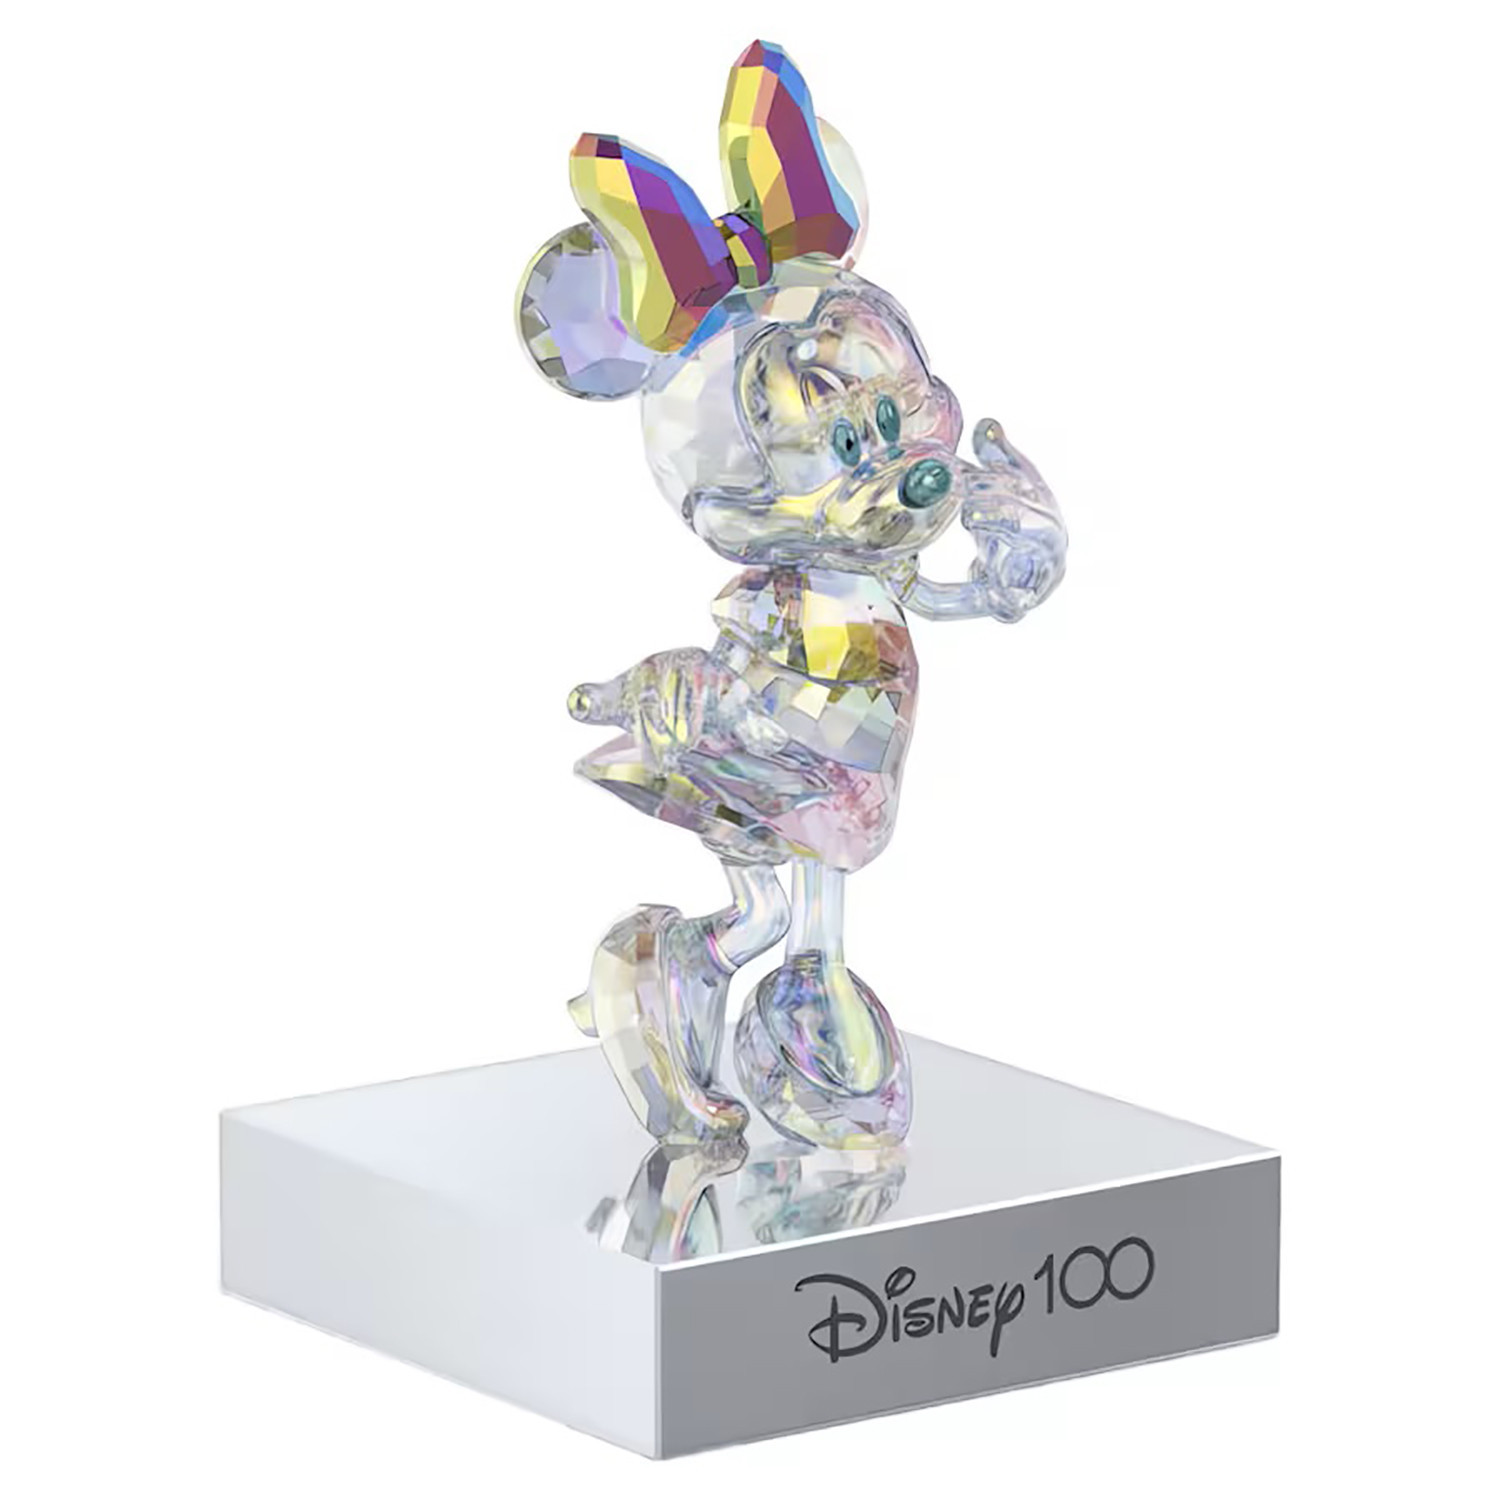 Figurine Swarovski Disney 100 Minnie Mouse